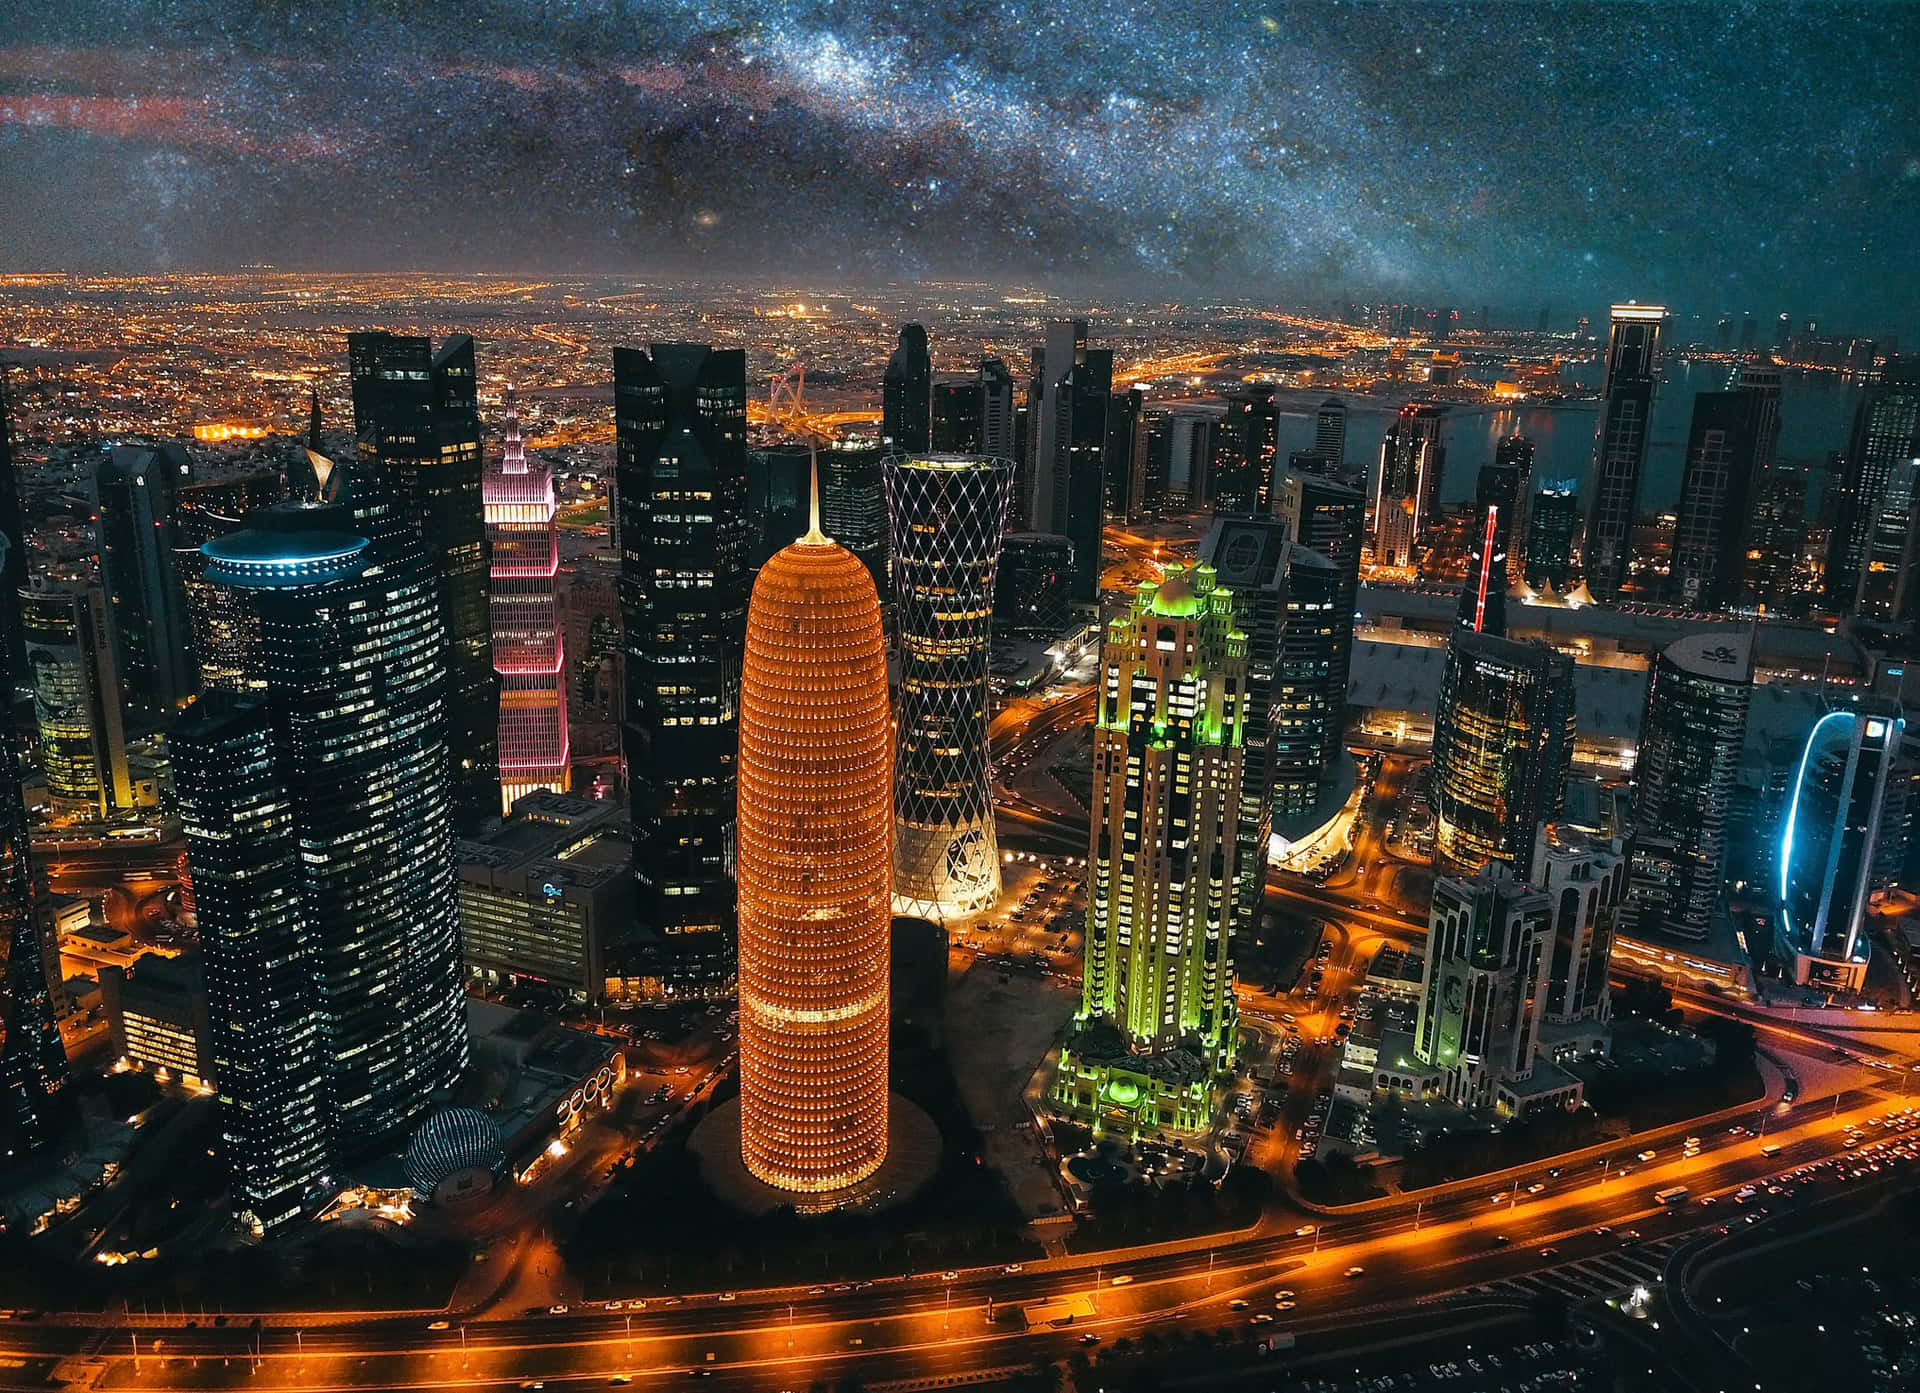 "The Dazzling City of Doha, Qatar"